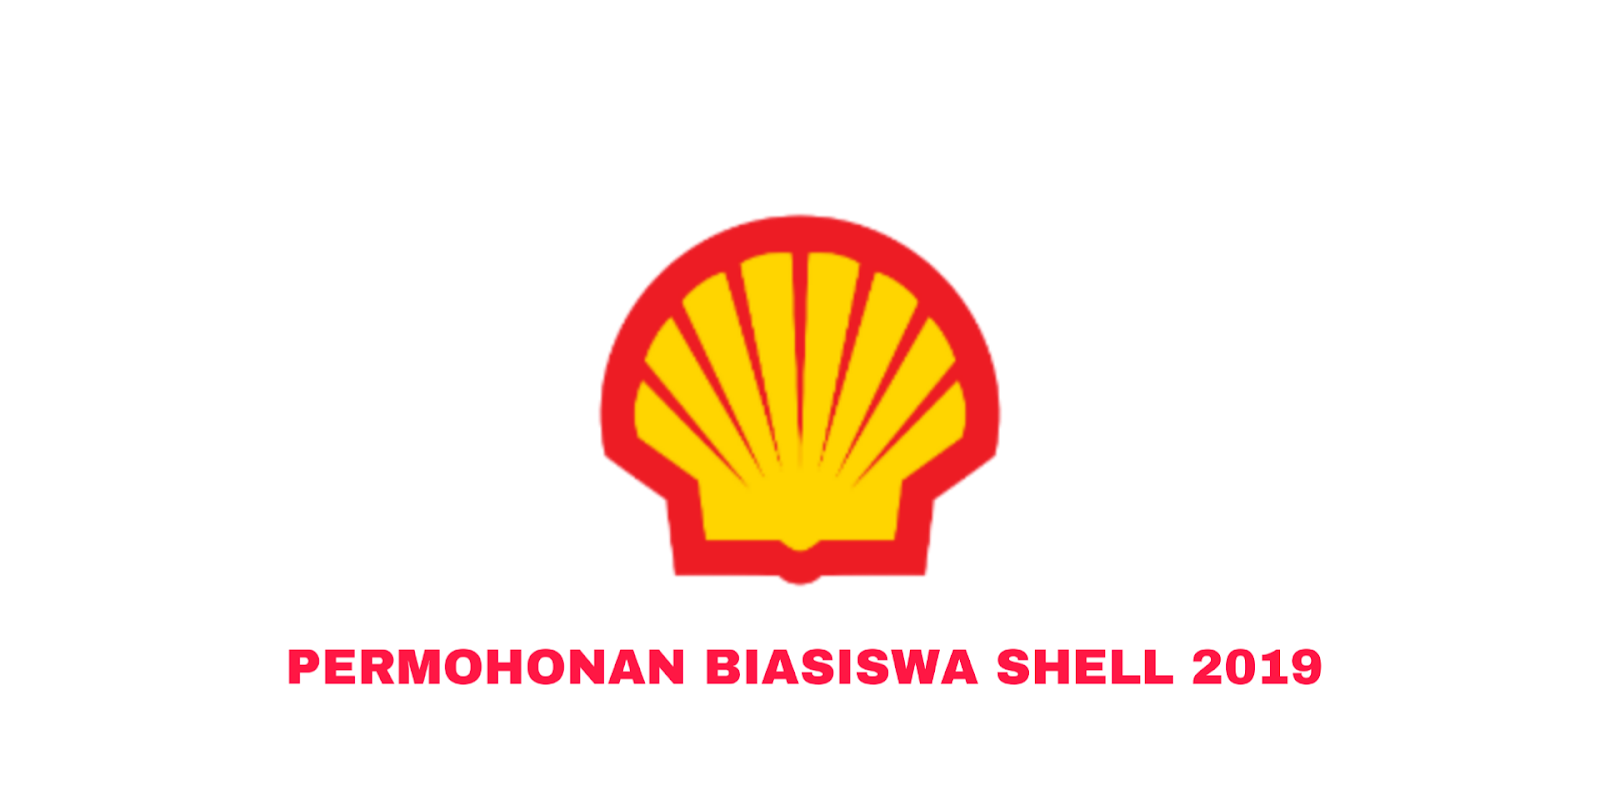 Permohonan Biasiswa Shell Malaysia 2019 Online